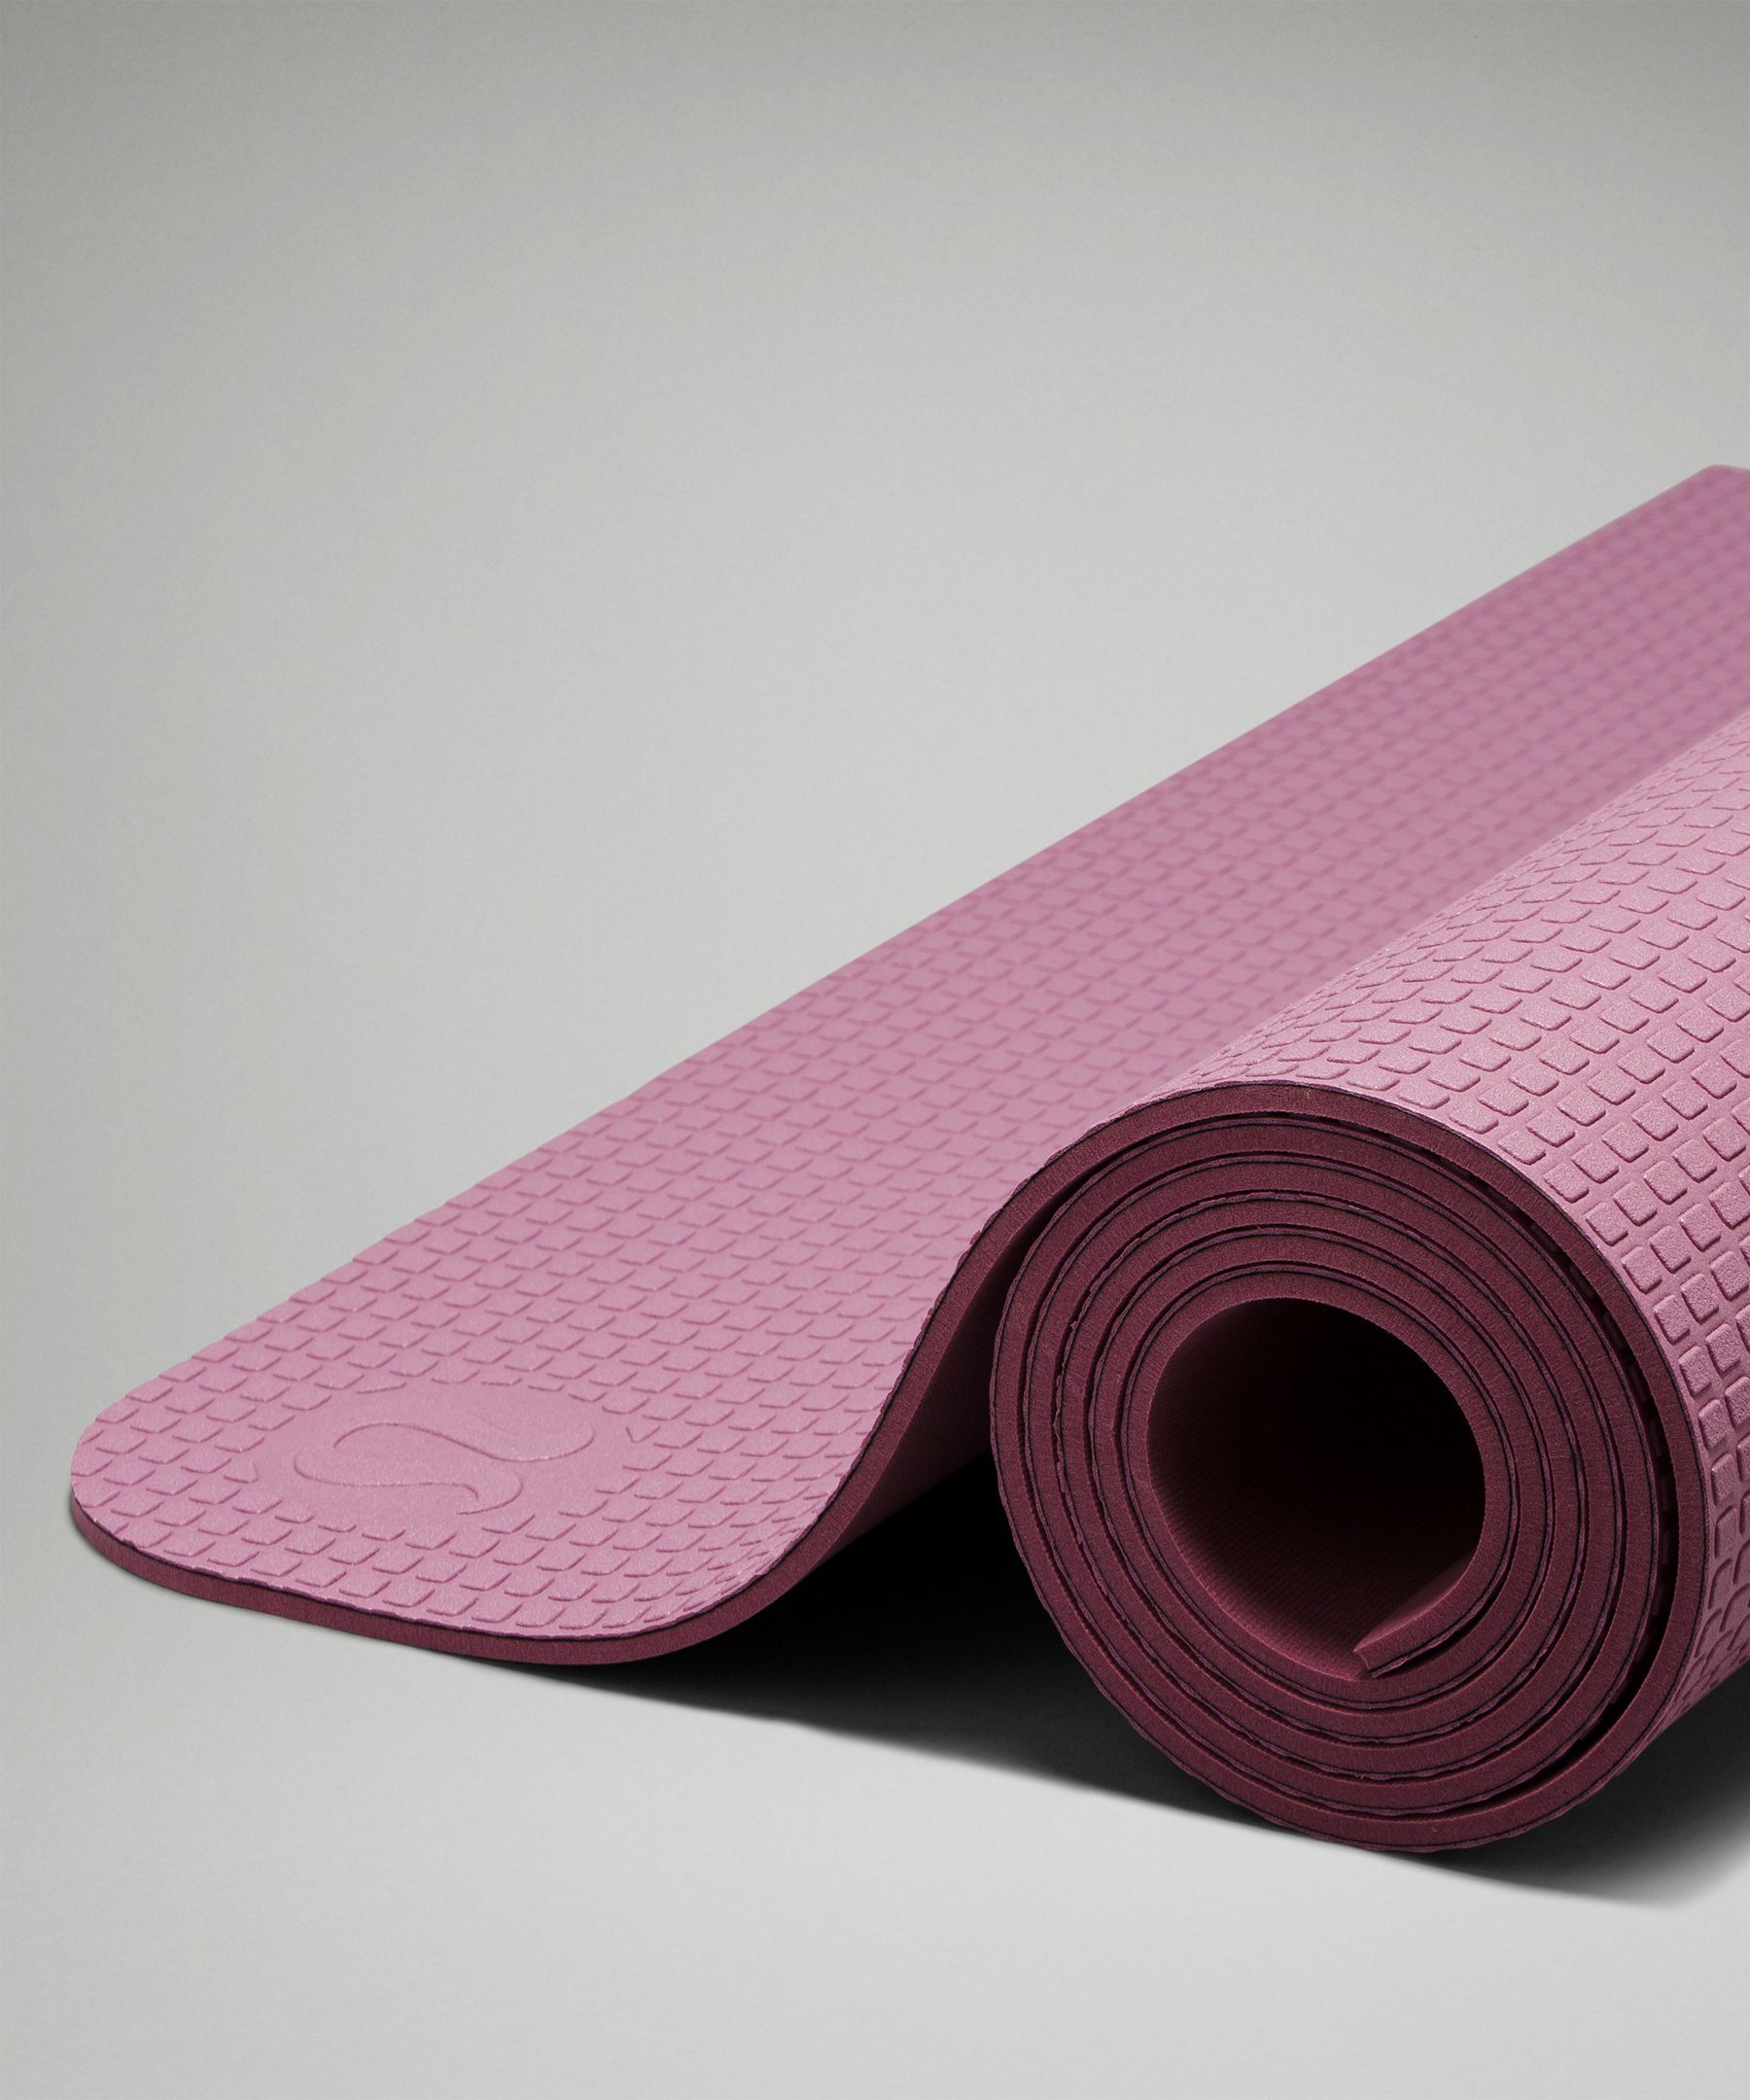 Lululemon 5mm Yoga Mat with Free Strap, Sports Equipment, Exercise